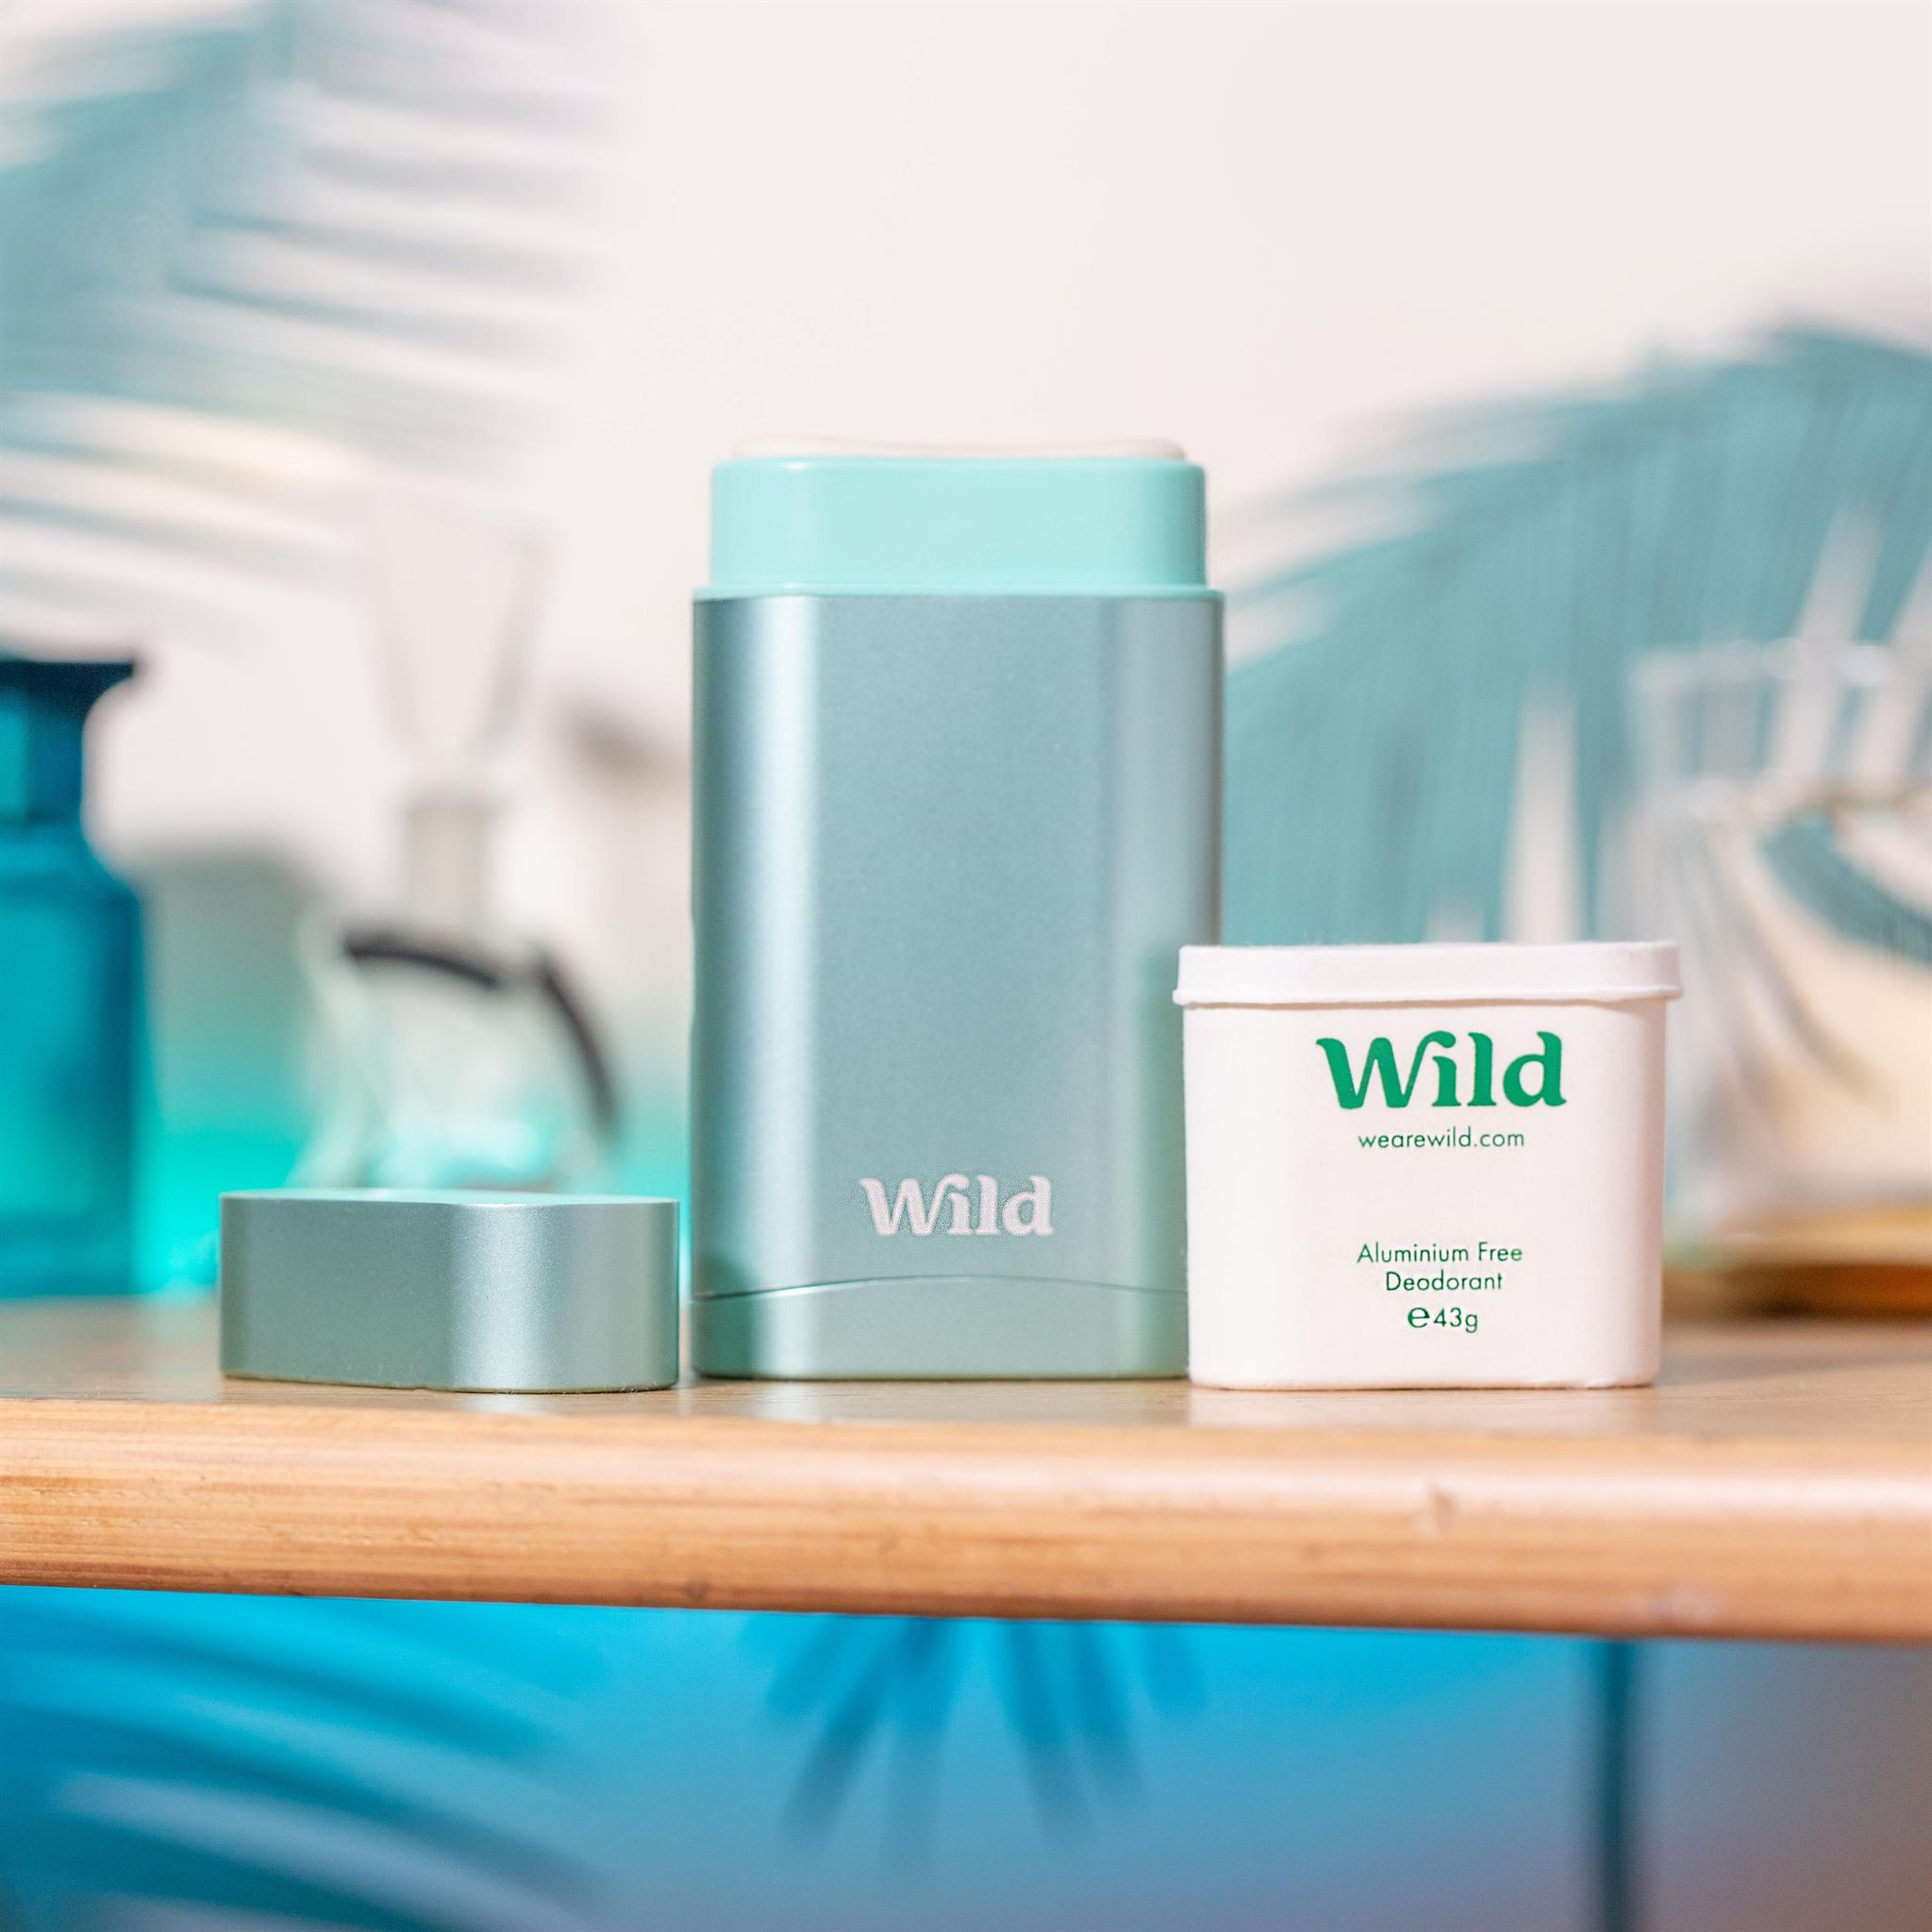 Wild Natural Deodorant on Bathroom Shelf